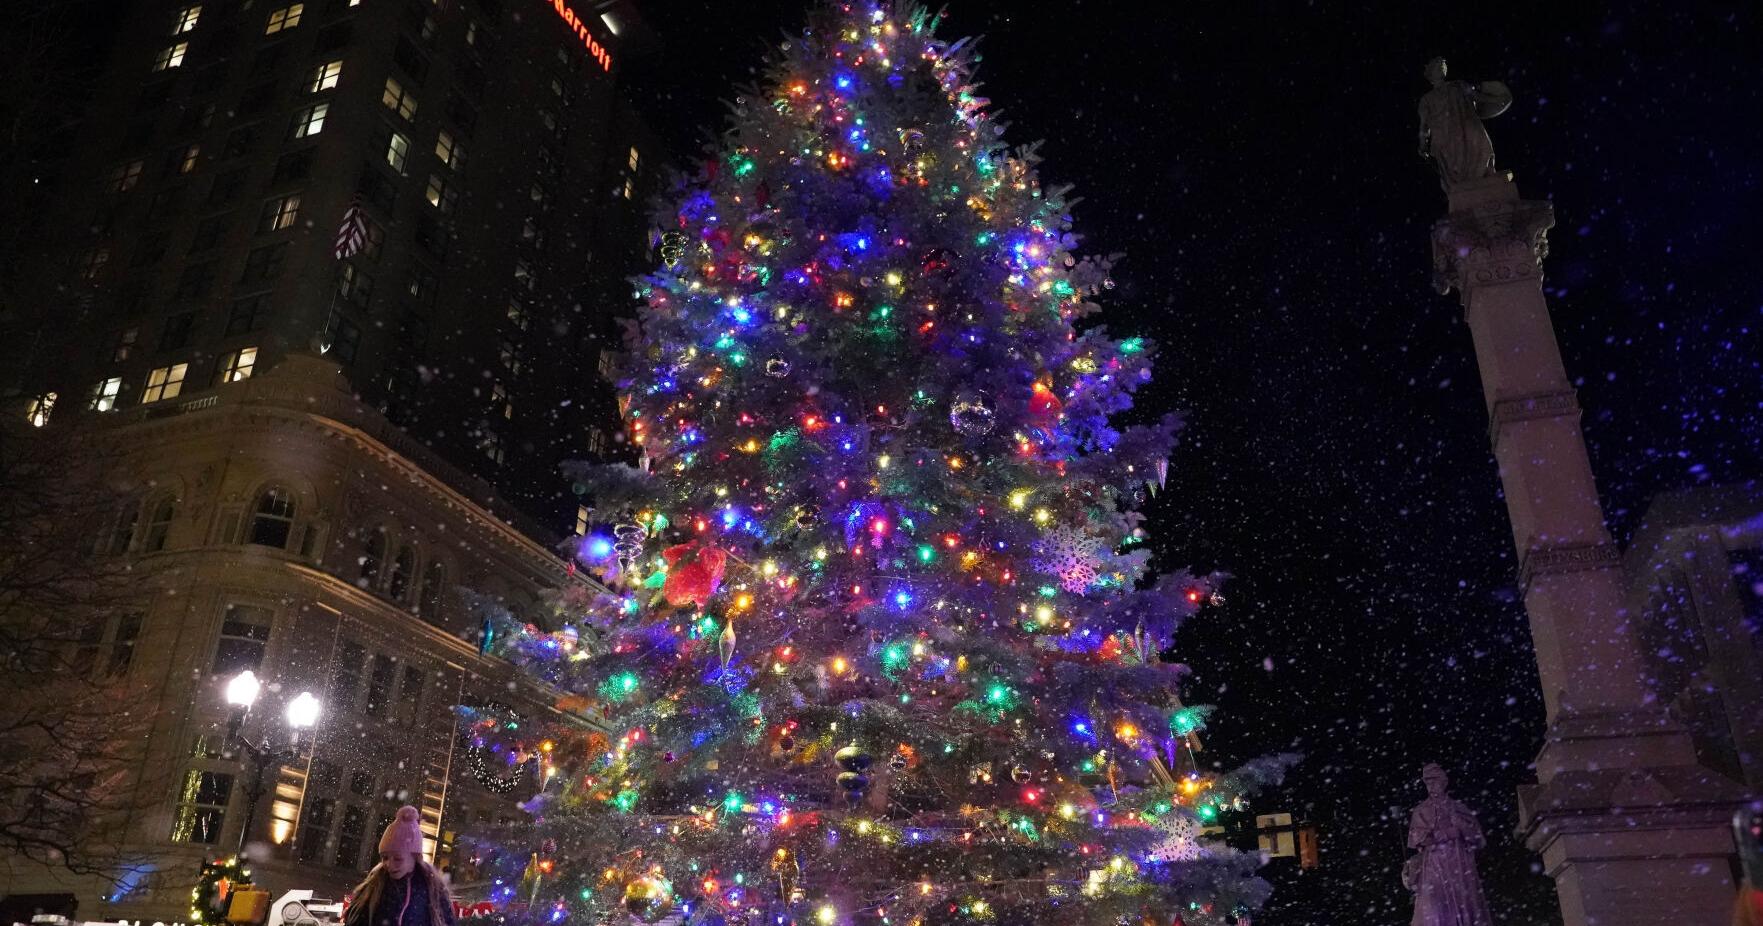 Mayor's Tree Lighting brings thousands to Penn Square, kicking off holiday season [photos]